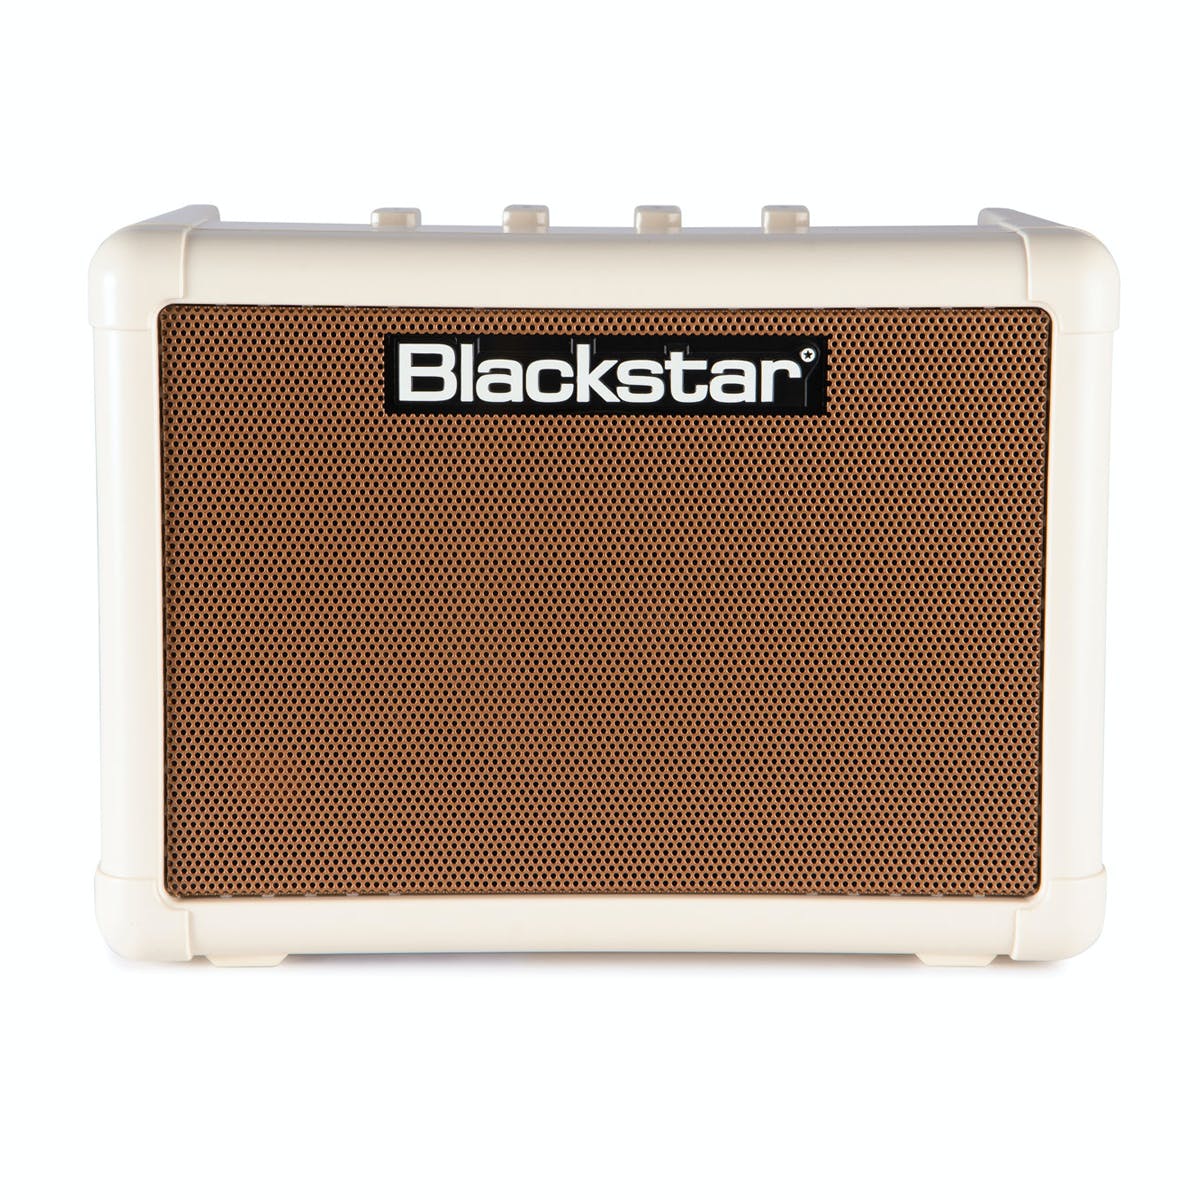 Blackstar Fly 3 Mini Acoustic Amp - Blackstar